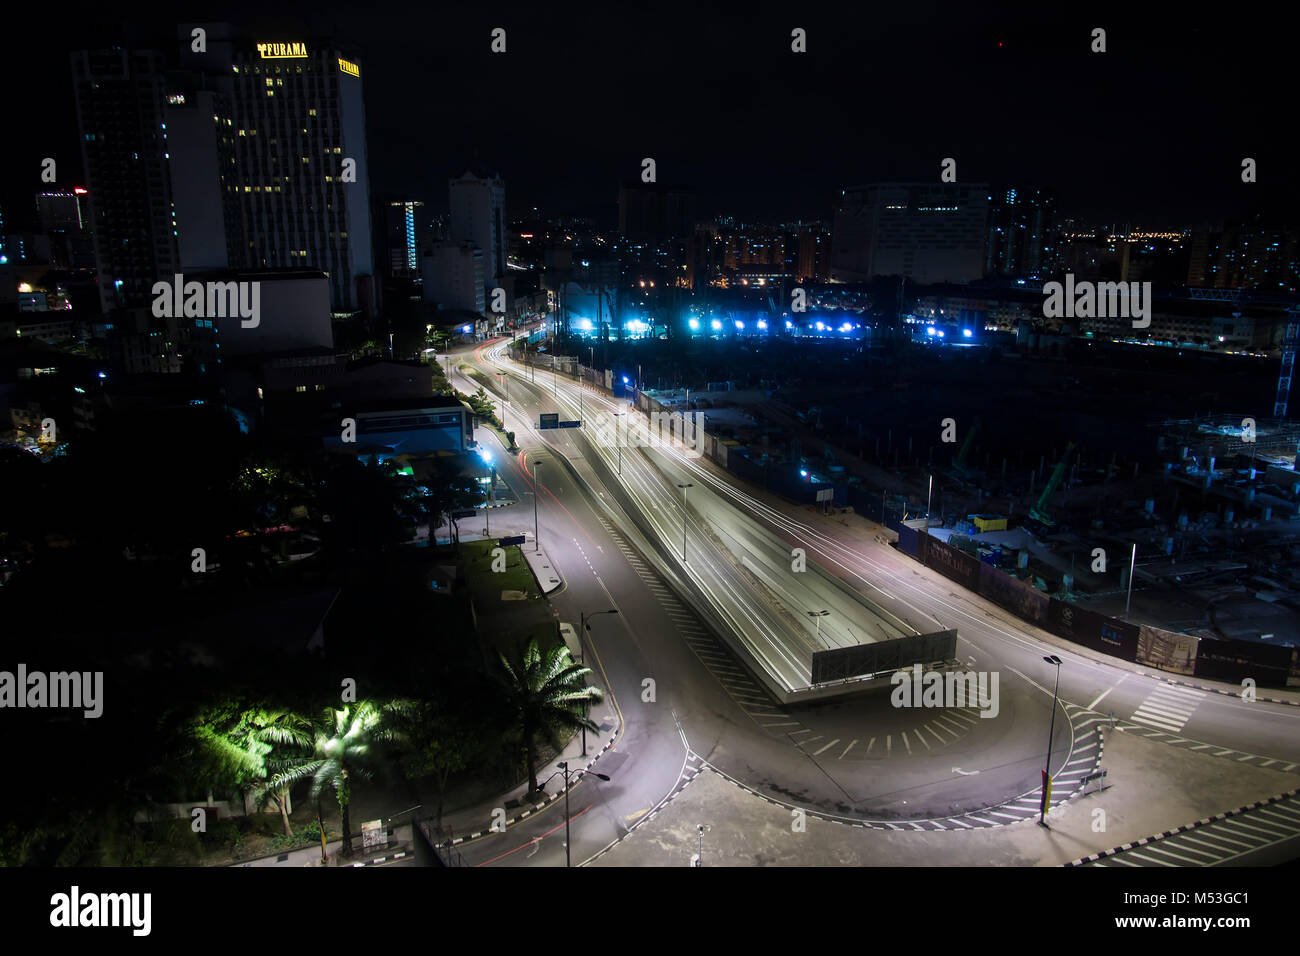 Motorcar light trails dans la rue de Kuala Lumpur Banque D'Images